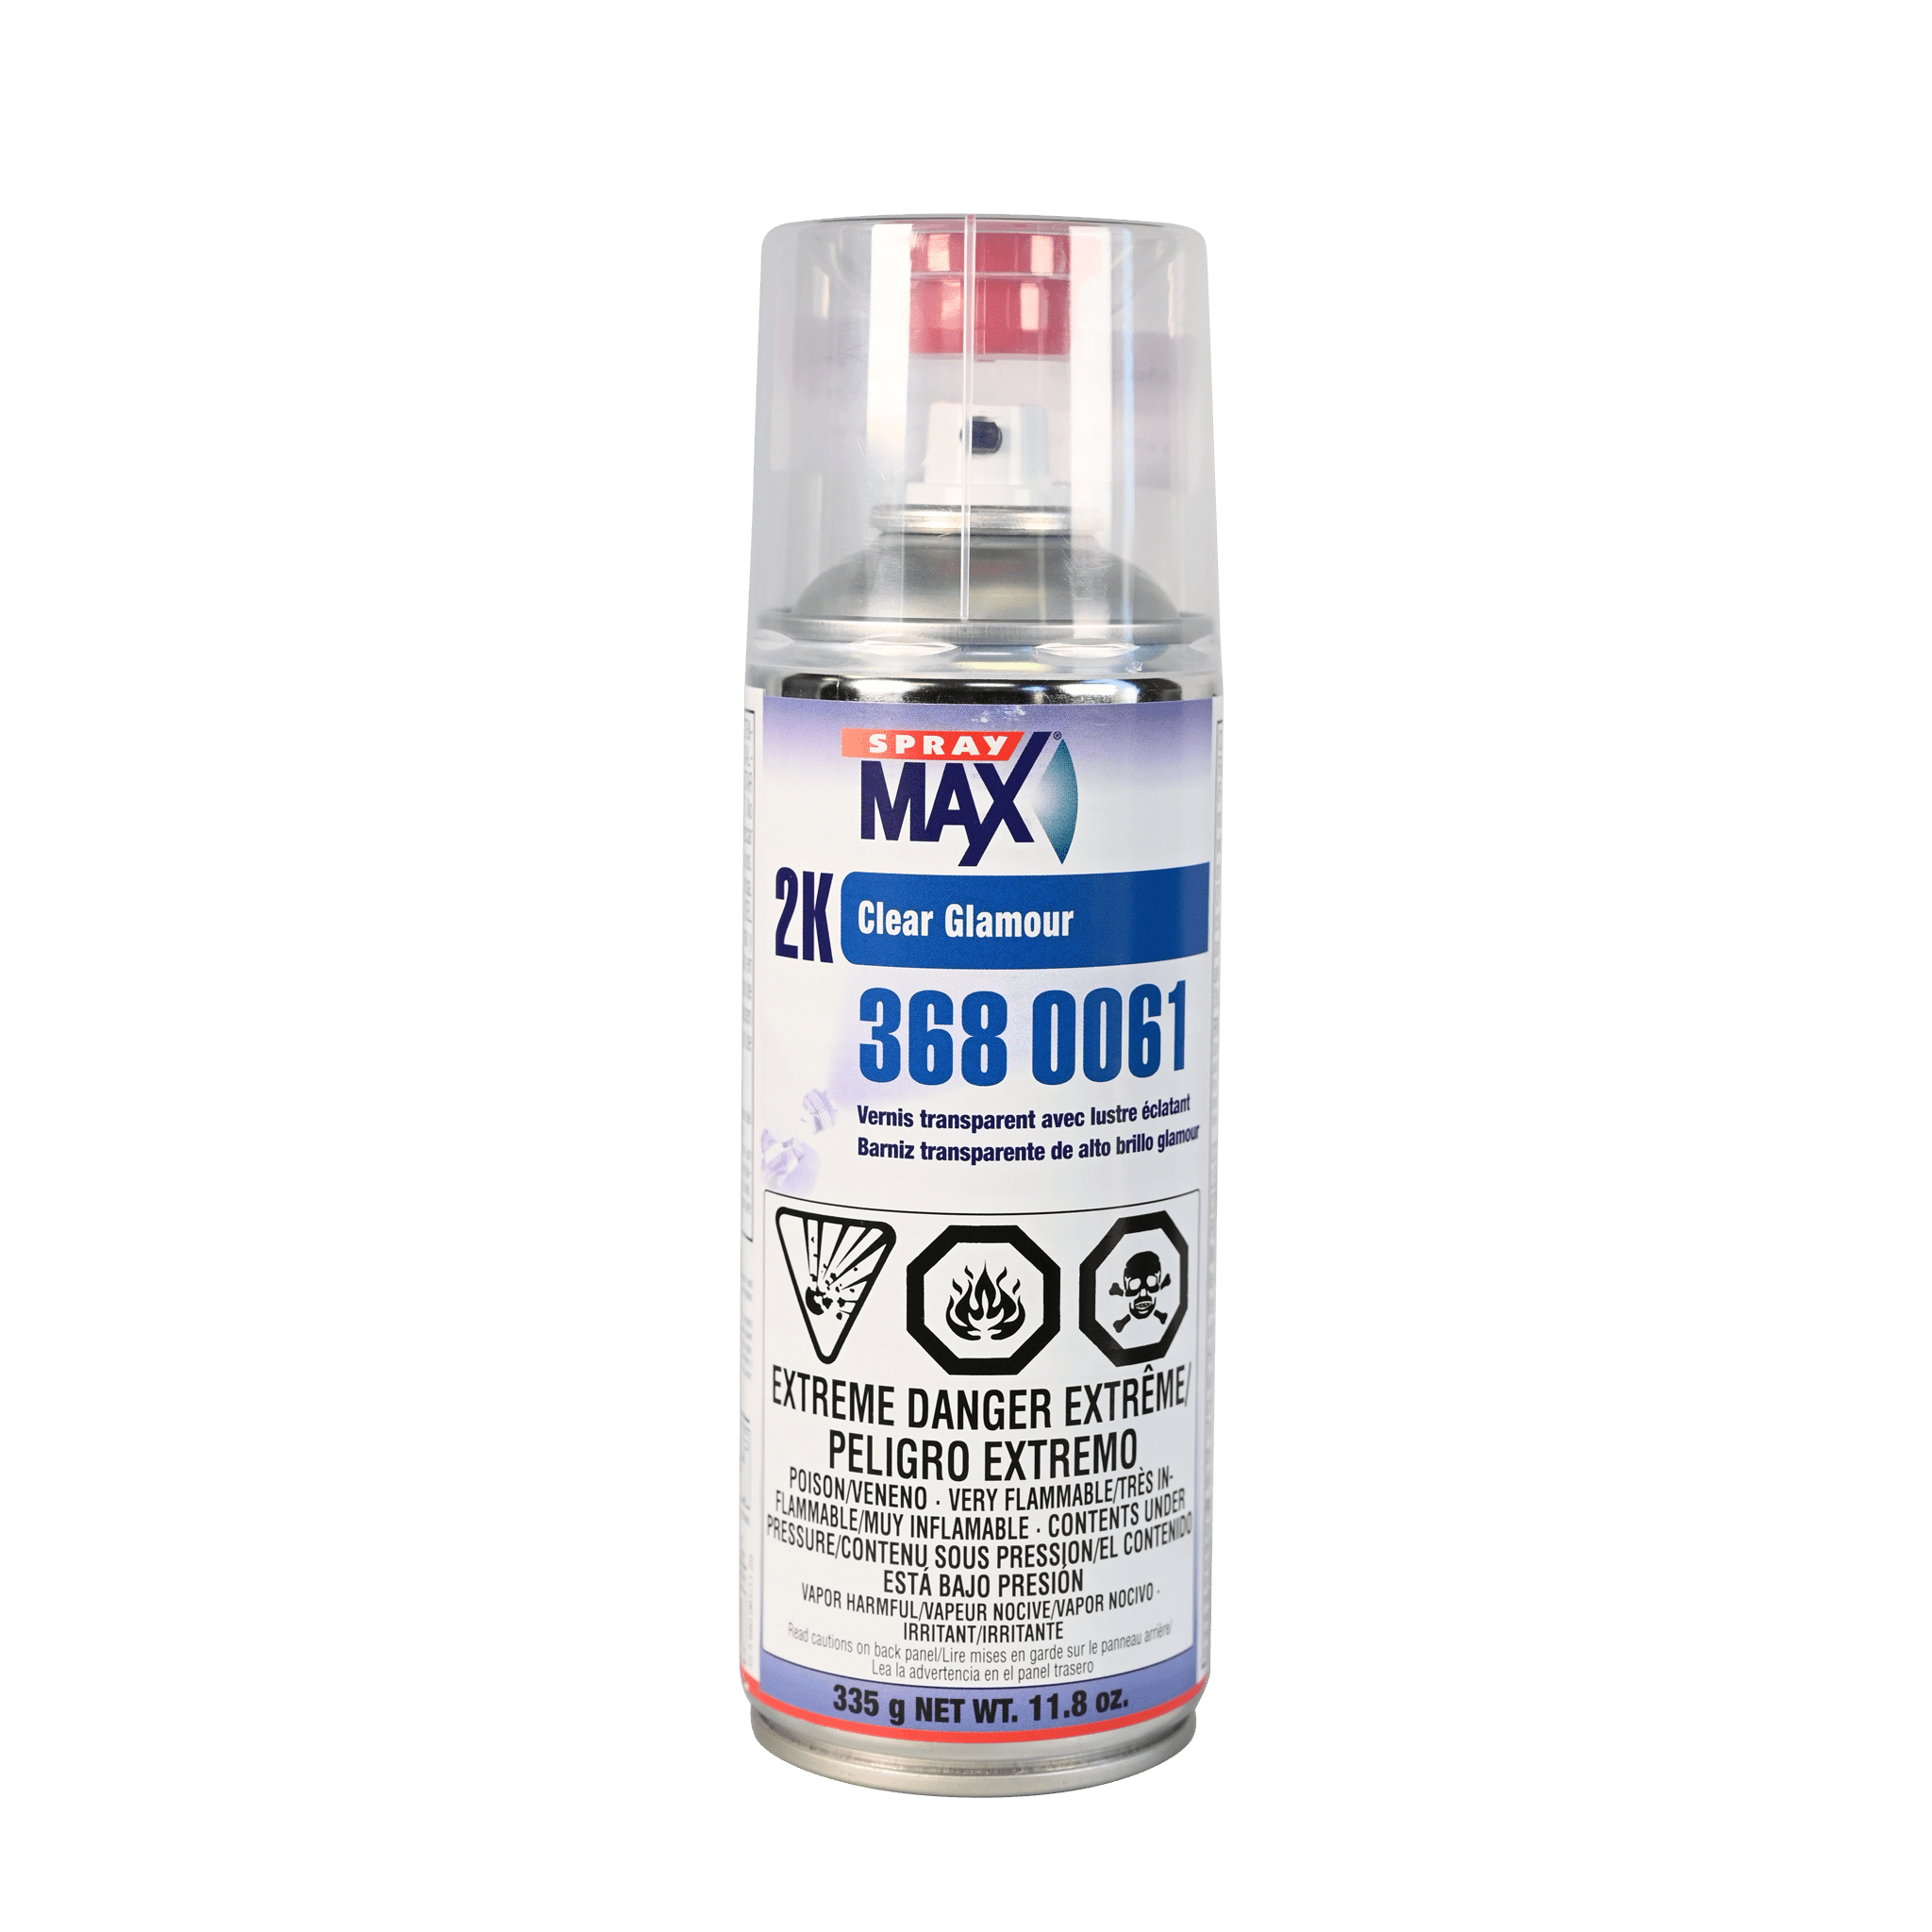 SprayMax Clear Glamour 2K Finish Spray - Matuska Taxidermy Supply Company